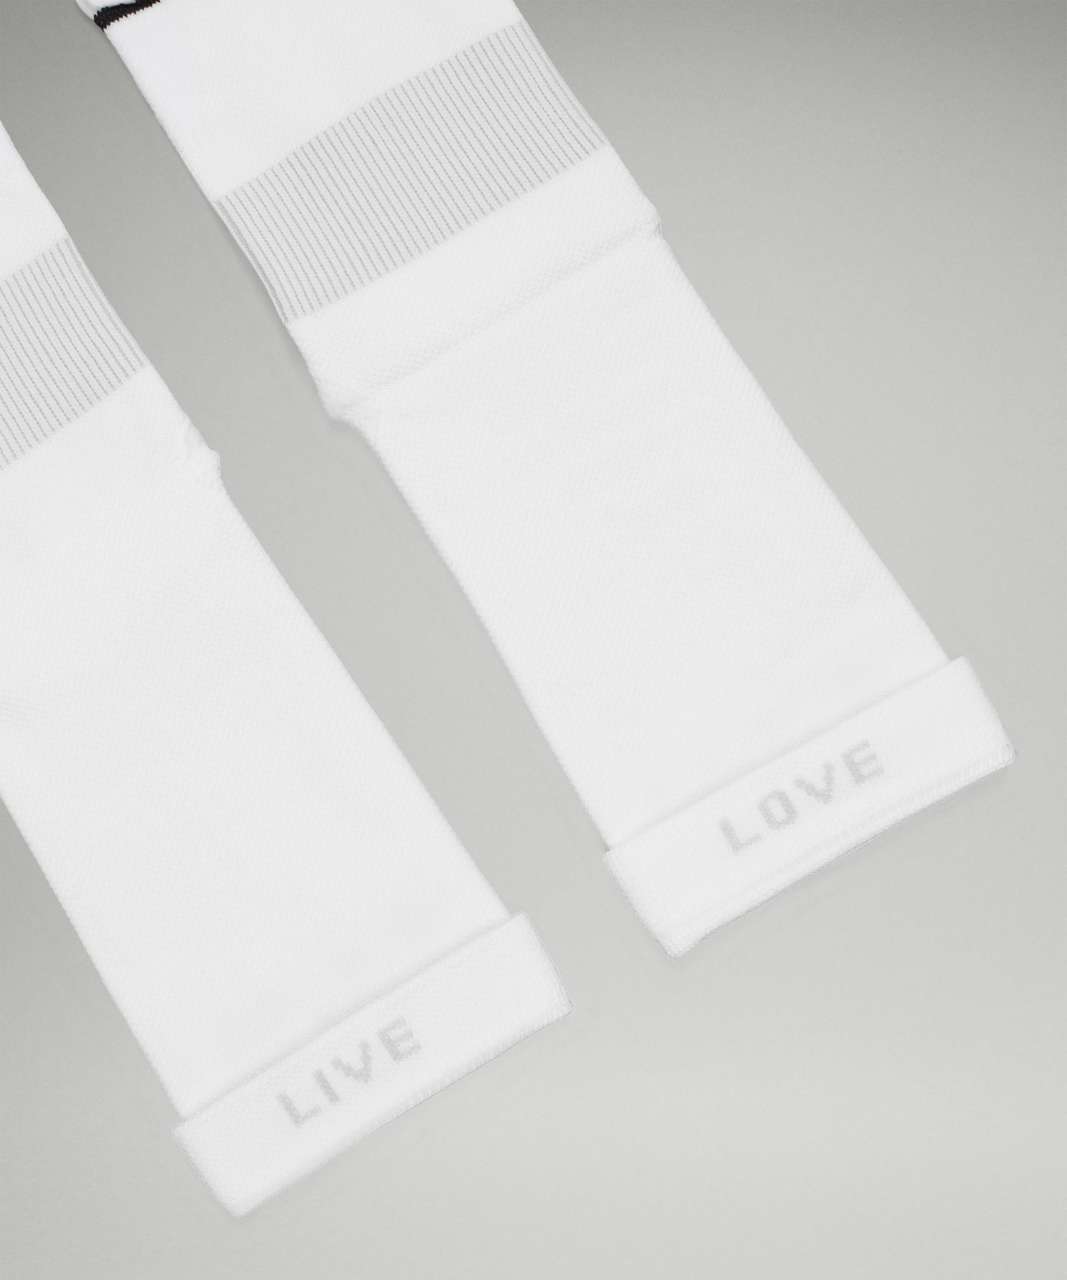 Lululemon Power Stride Crew Sock 3 Pack *Stripe - White / Heather Grey / Black